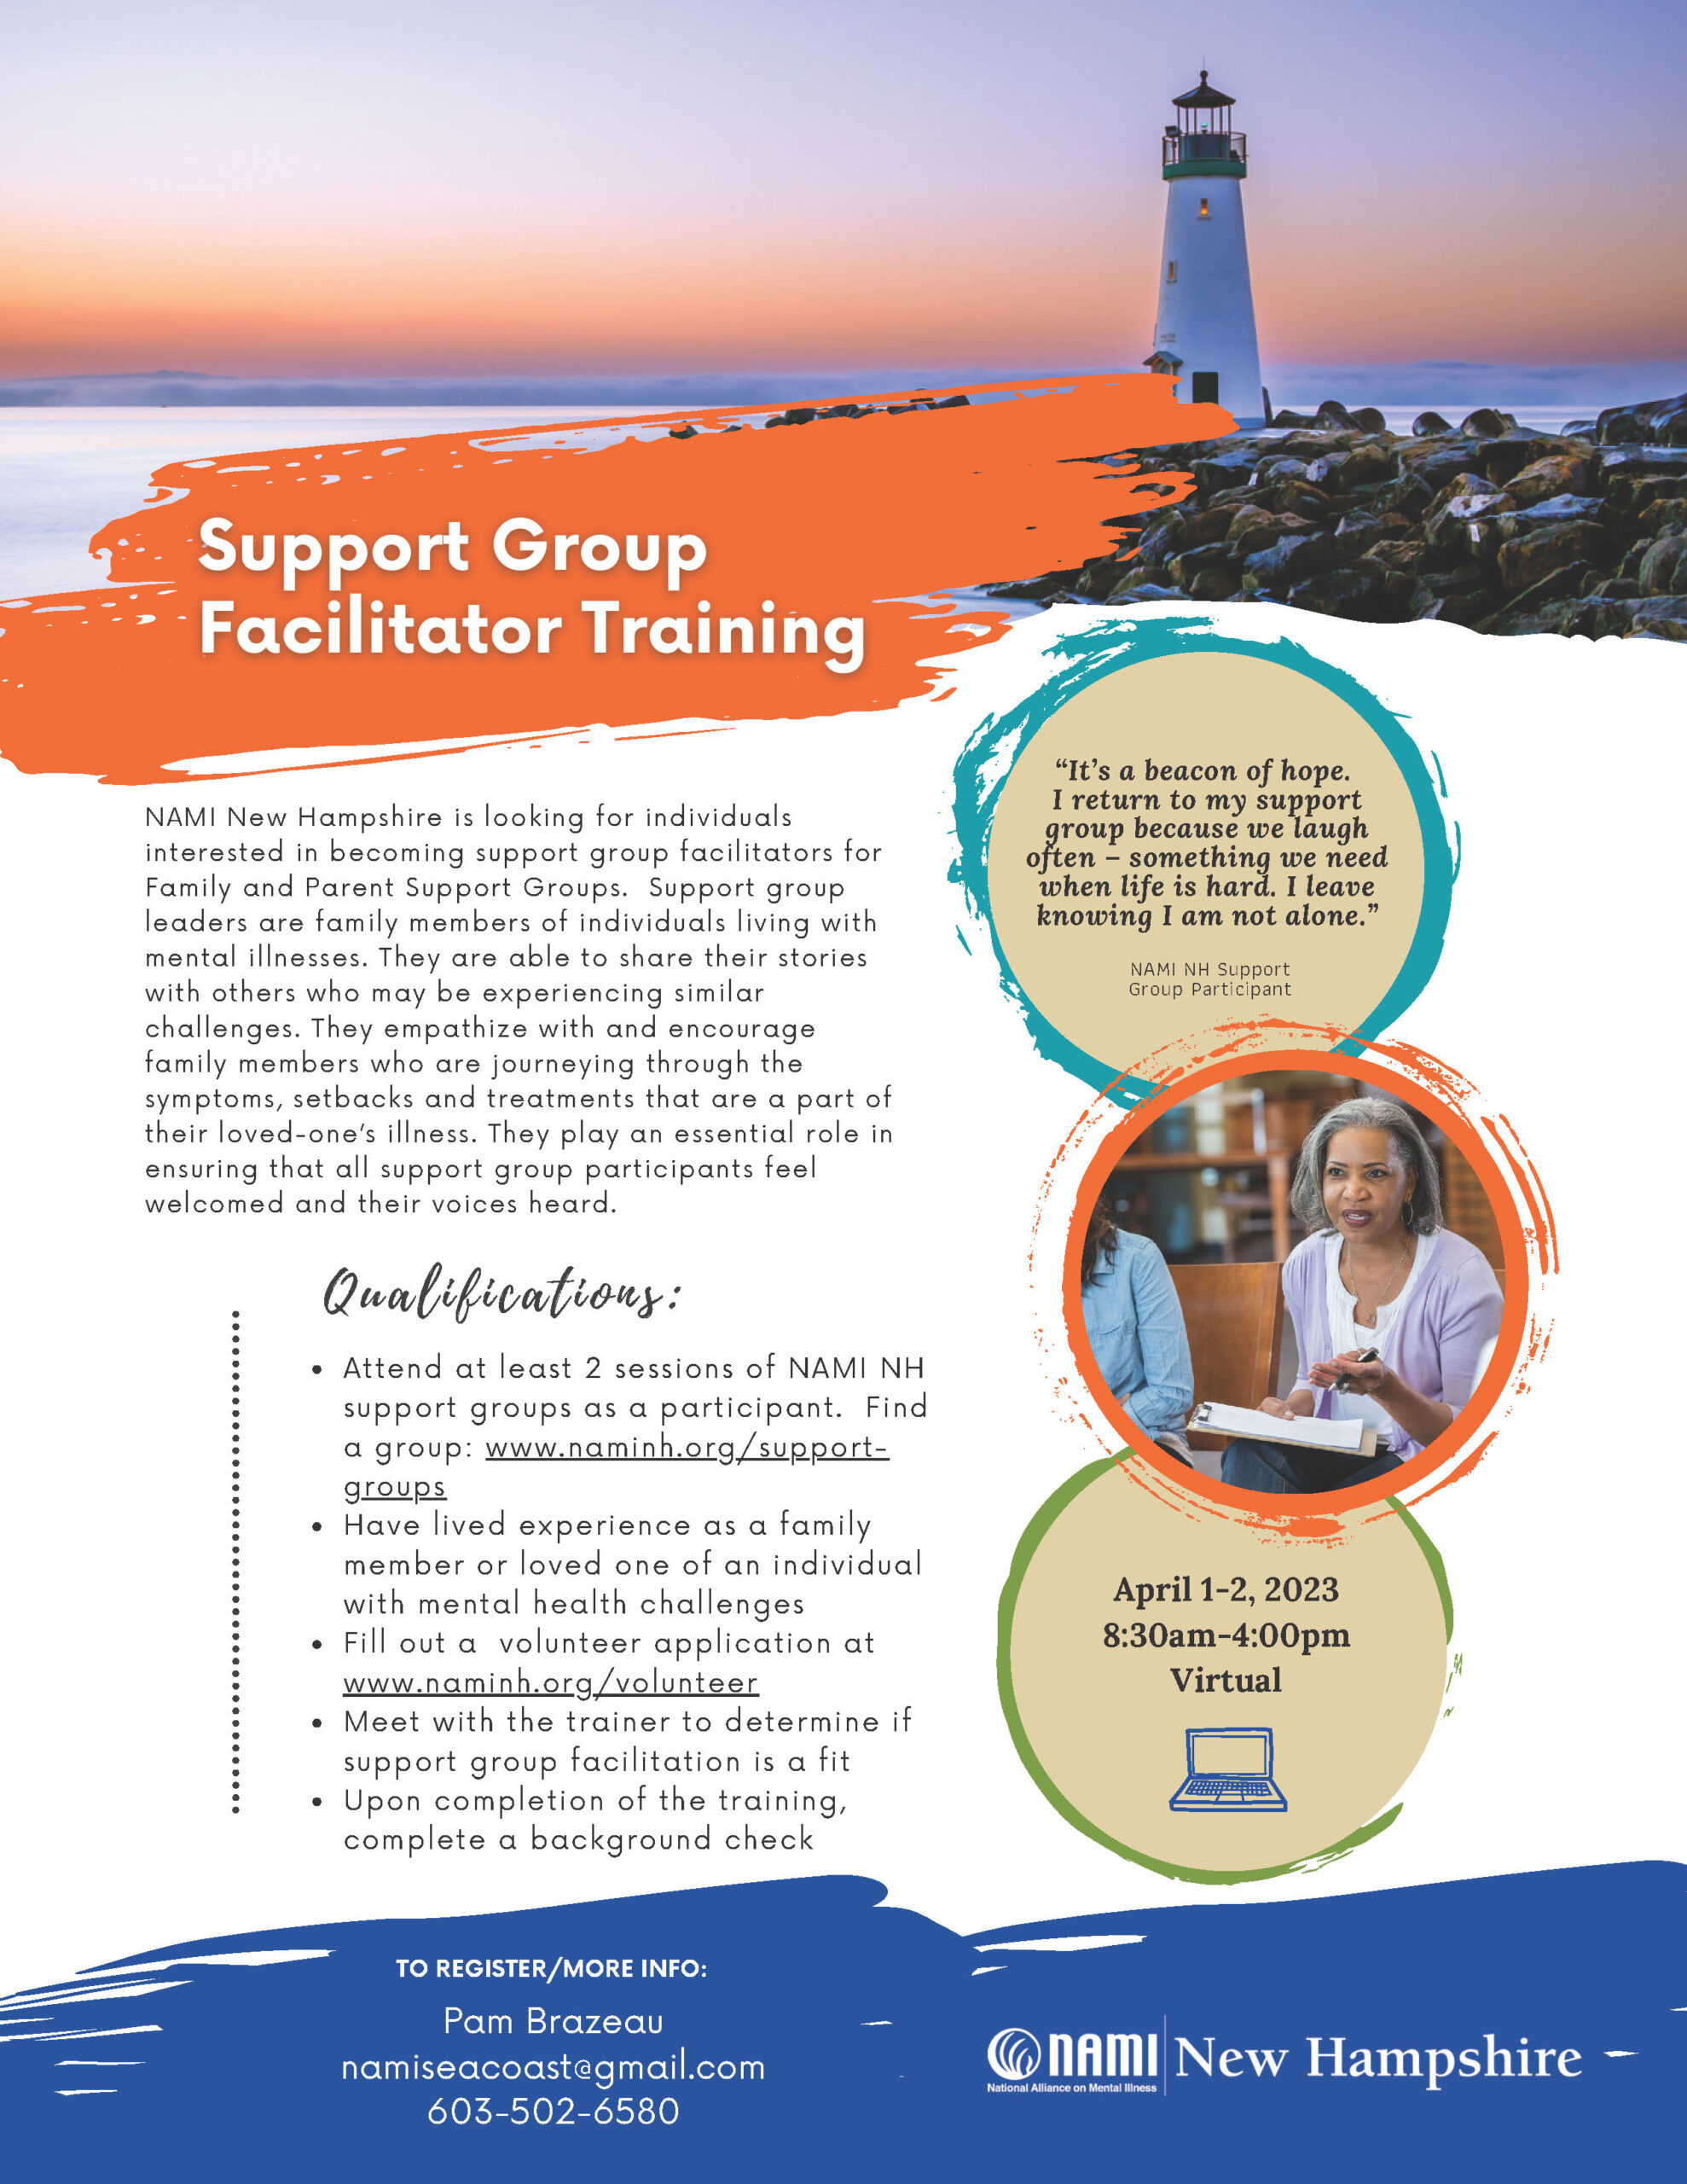 Support Group Facilitator Training